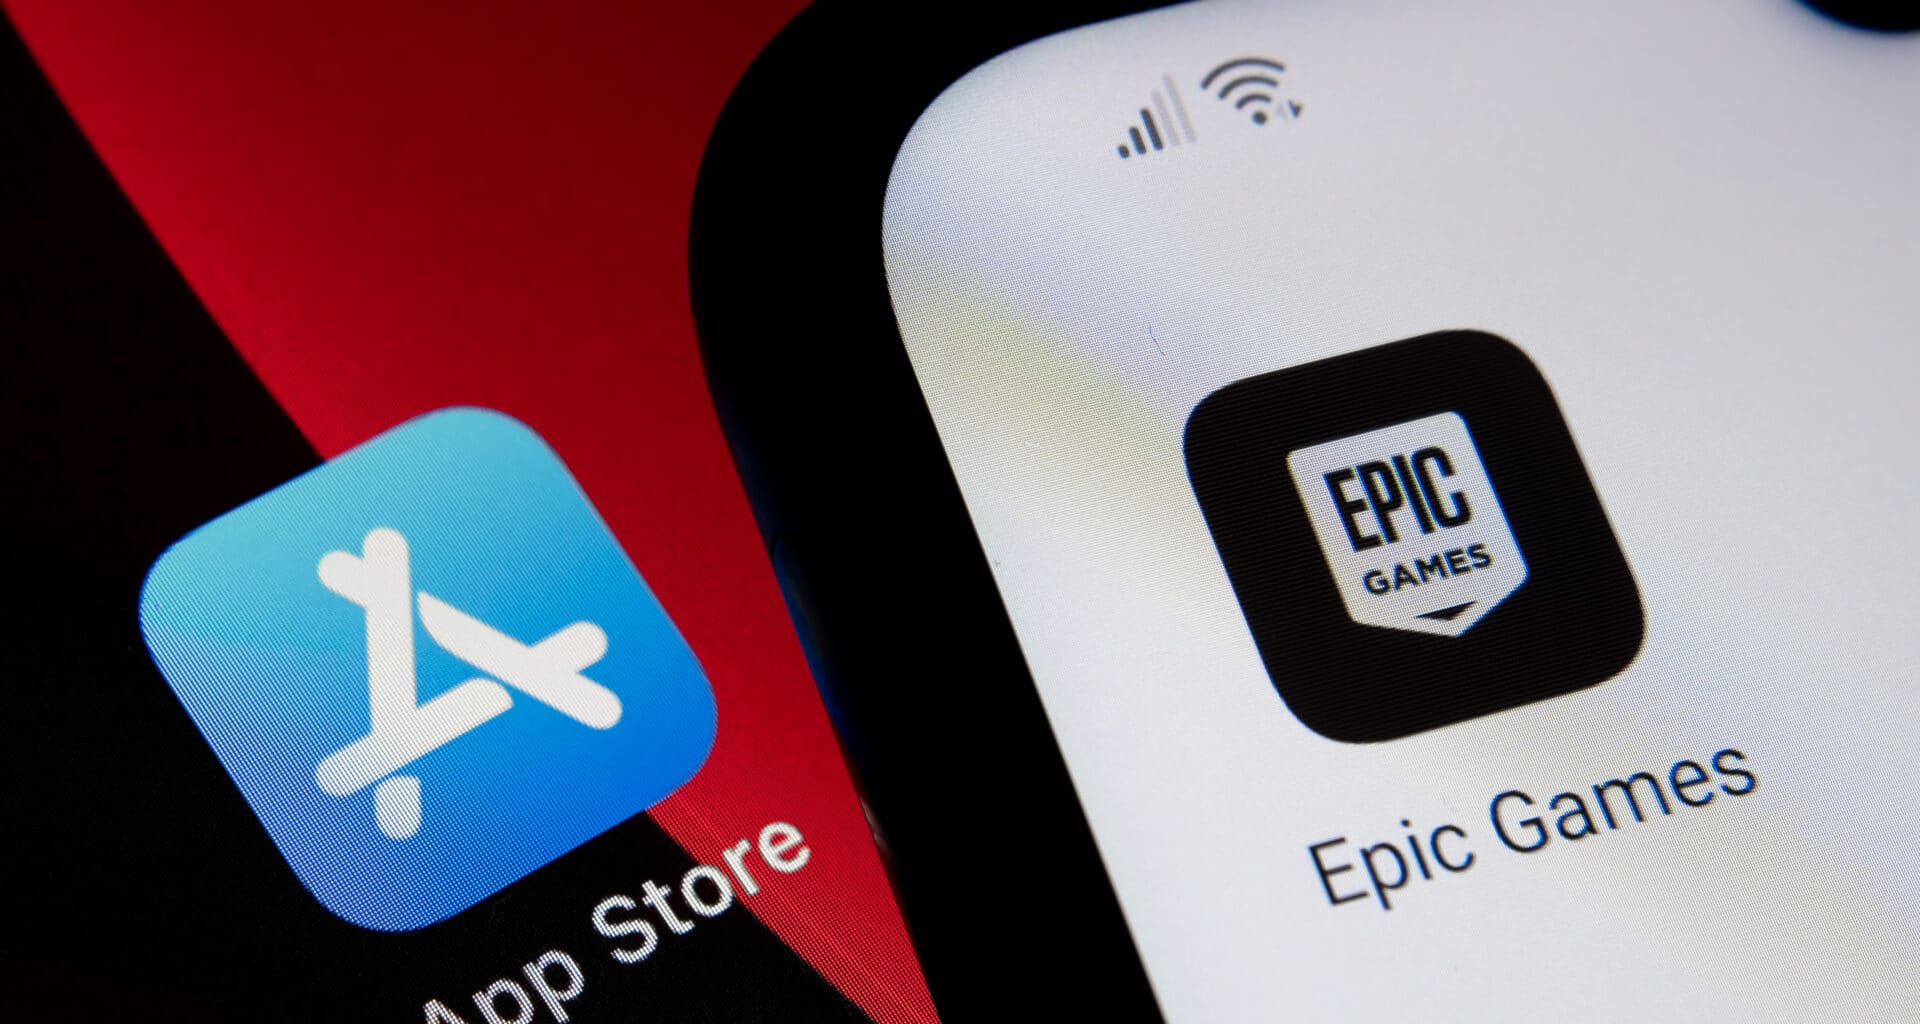 App Store e Epic Games